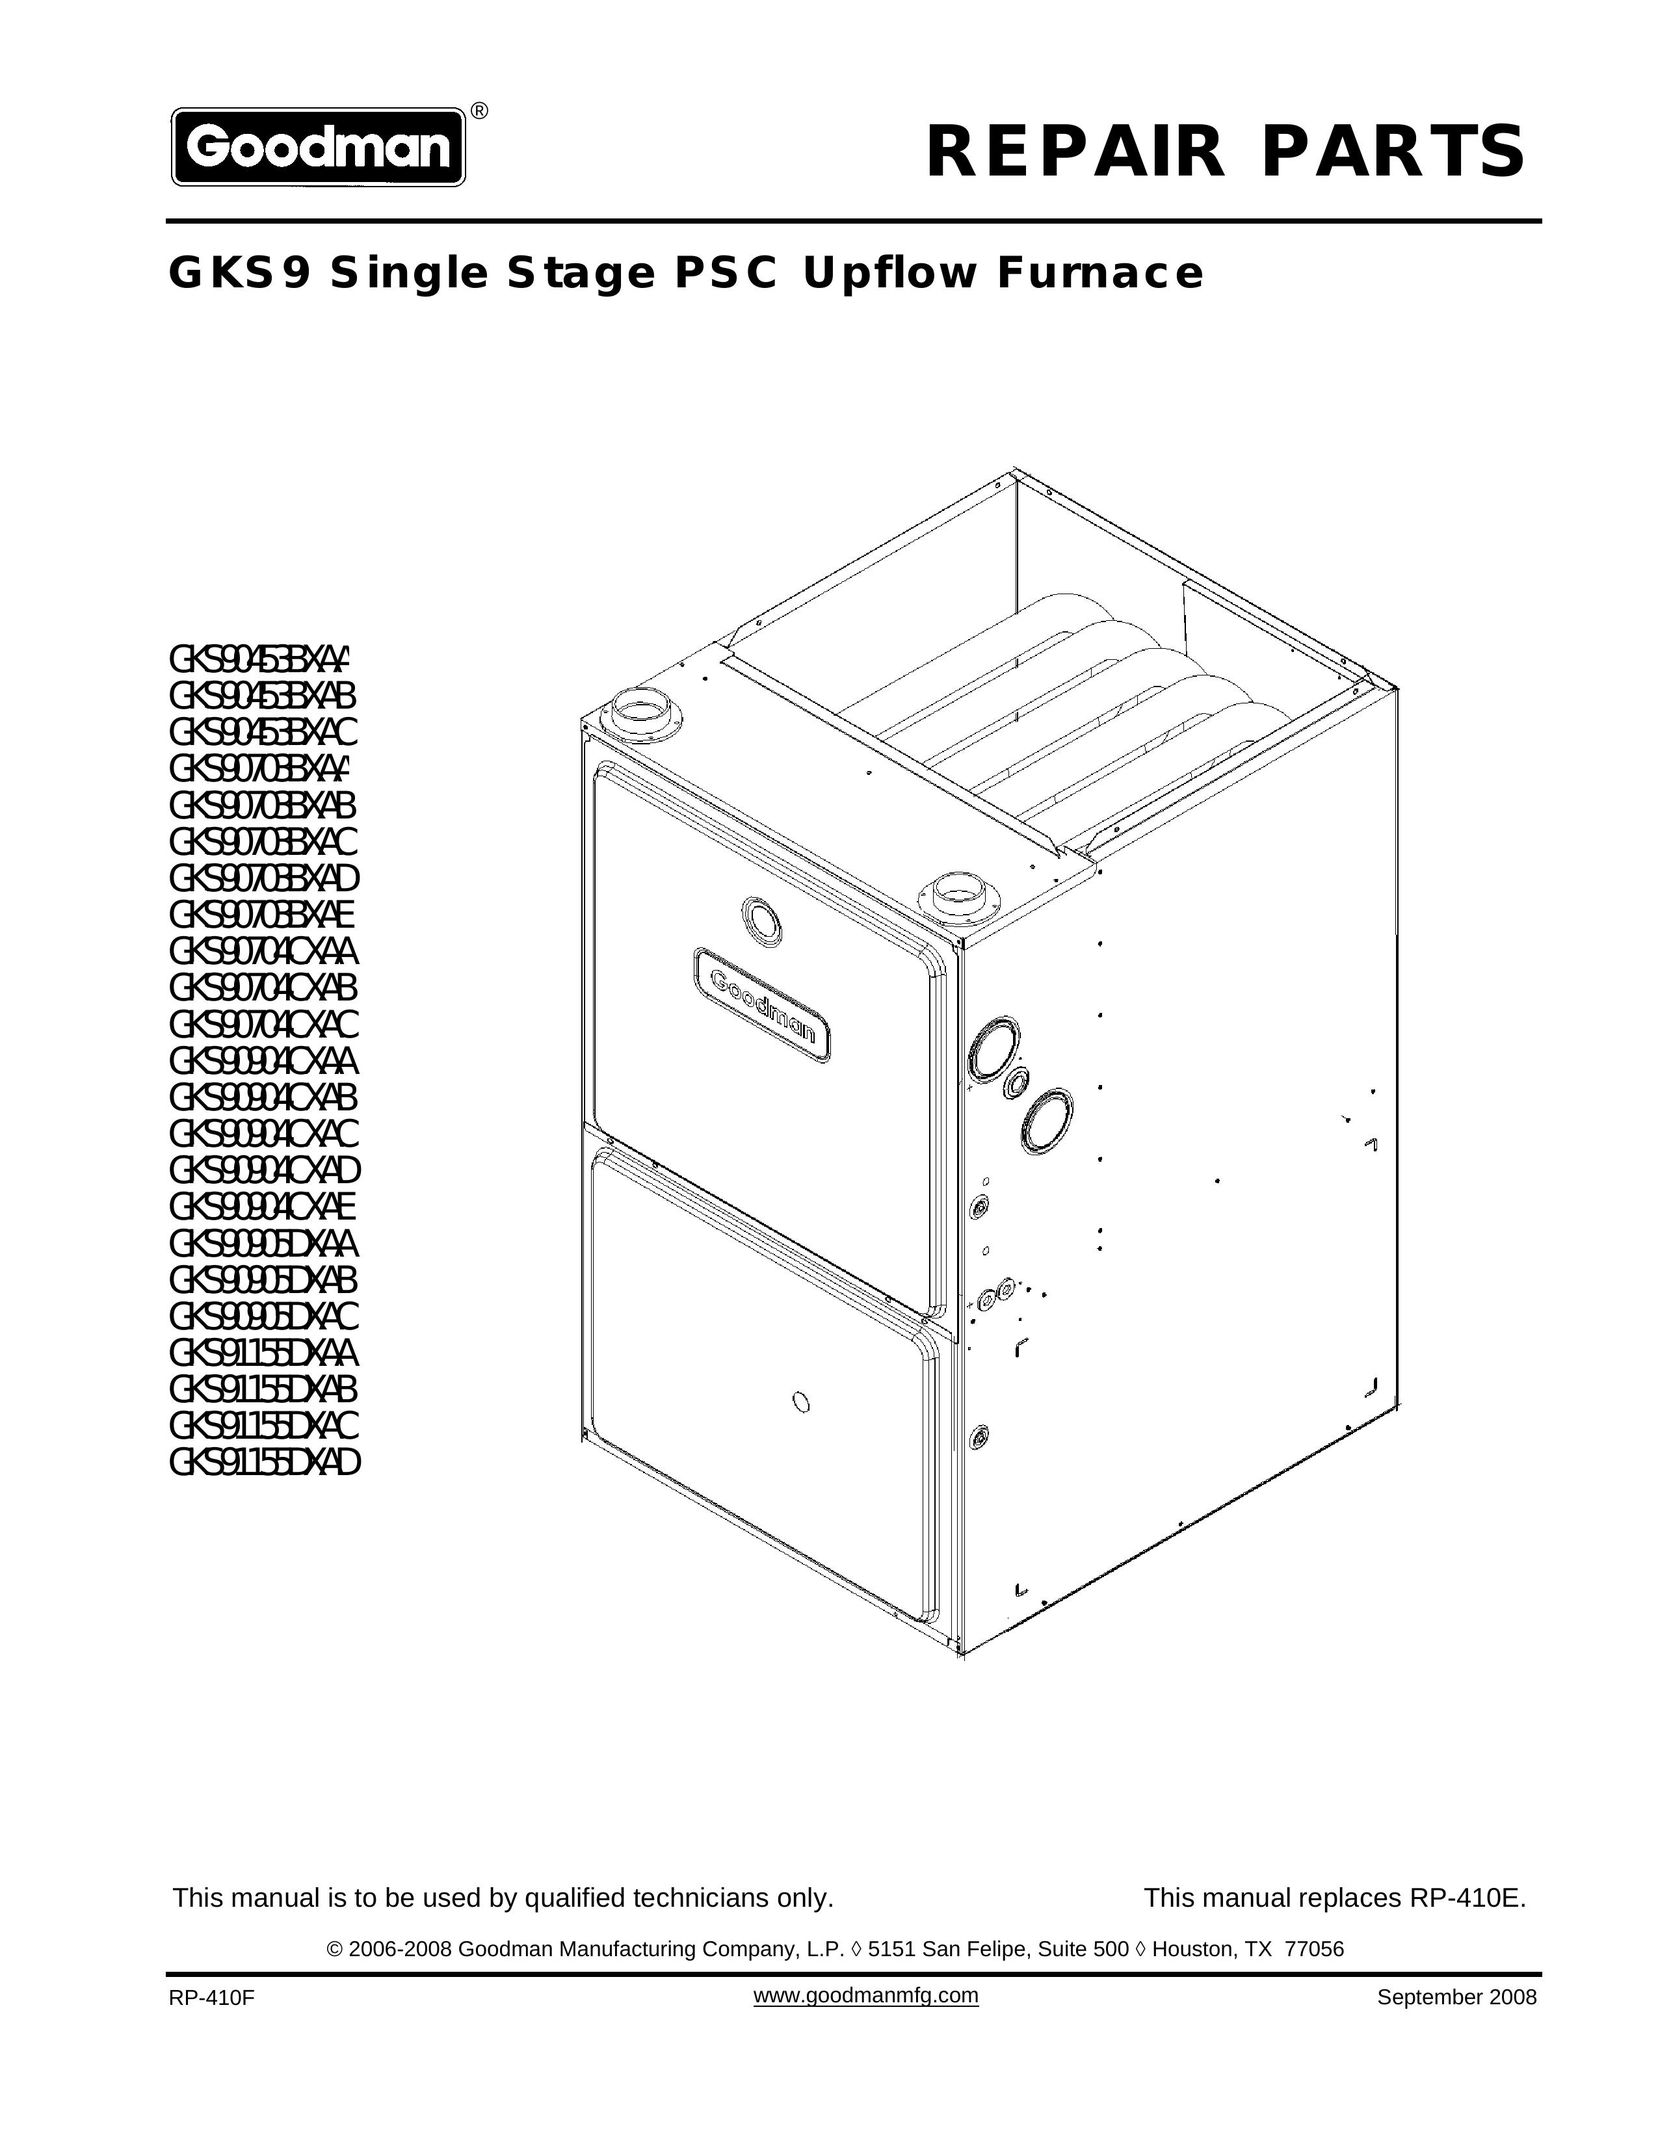 Goodman Mfg GKS90703BXAD Furnace User Manual